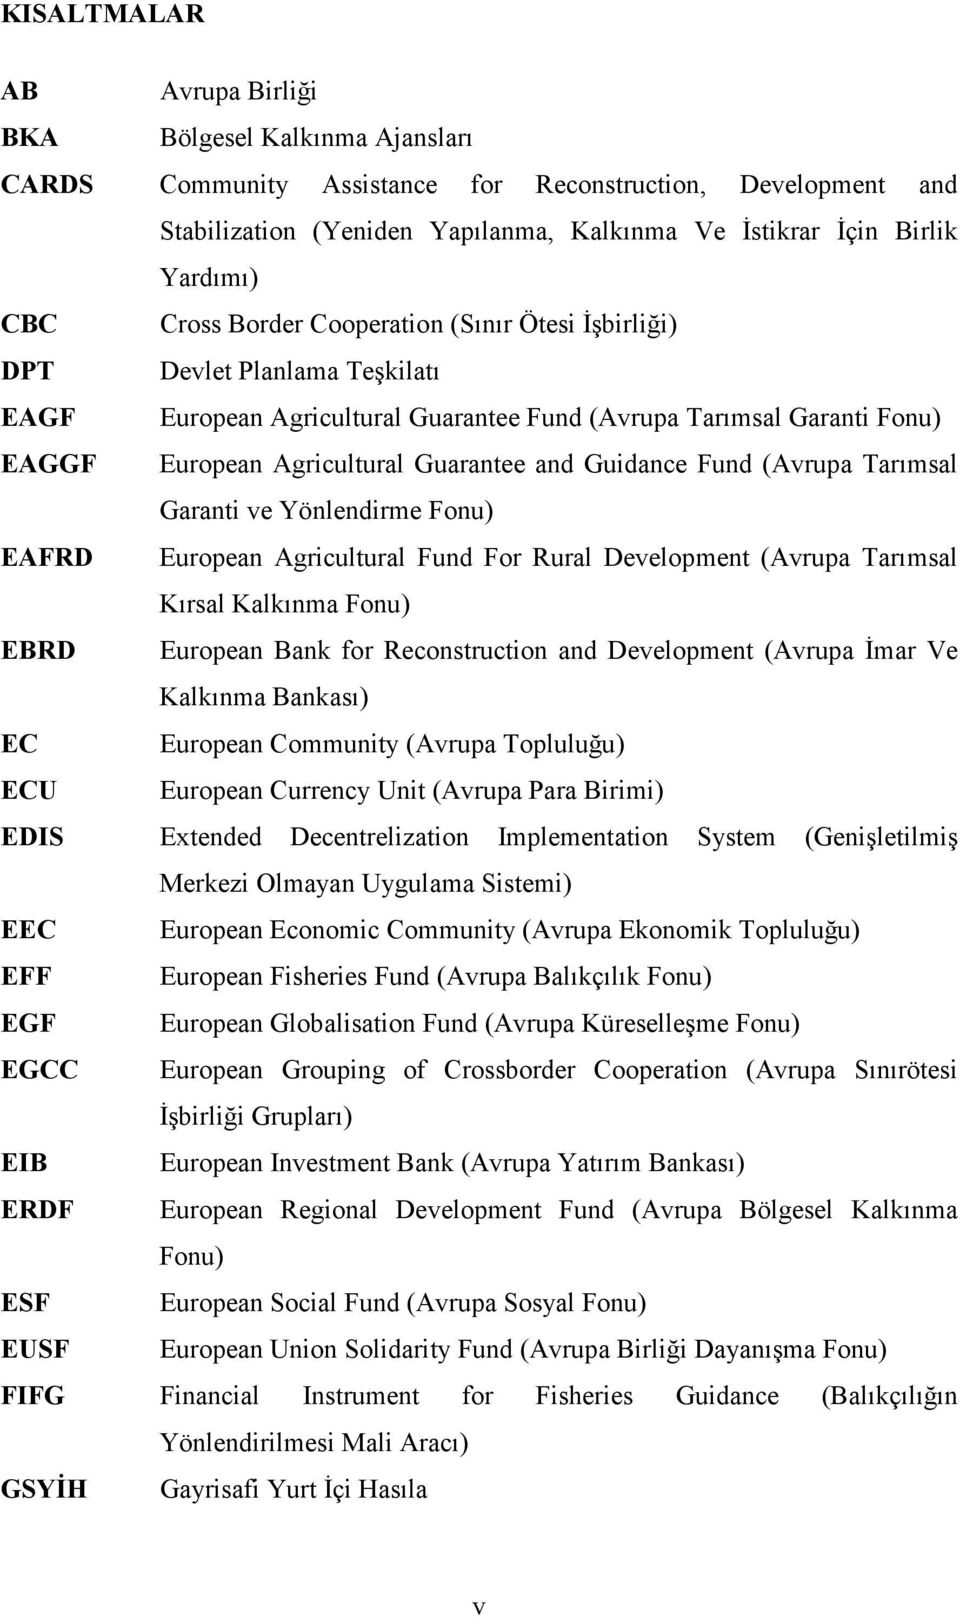 Guarantee and Guidance Fund (Avrupa Tarımsal Garanti ve Yönlendirme Fonu) EAFRD European Agricultural Fund For Rural Development (Avrupa Tarımsal Kırsal Kalkınma Fonu) EBRD European Bank for